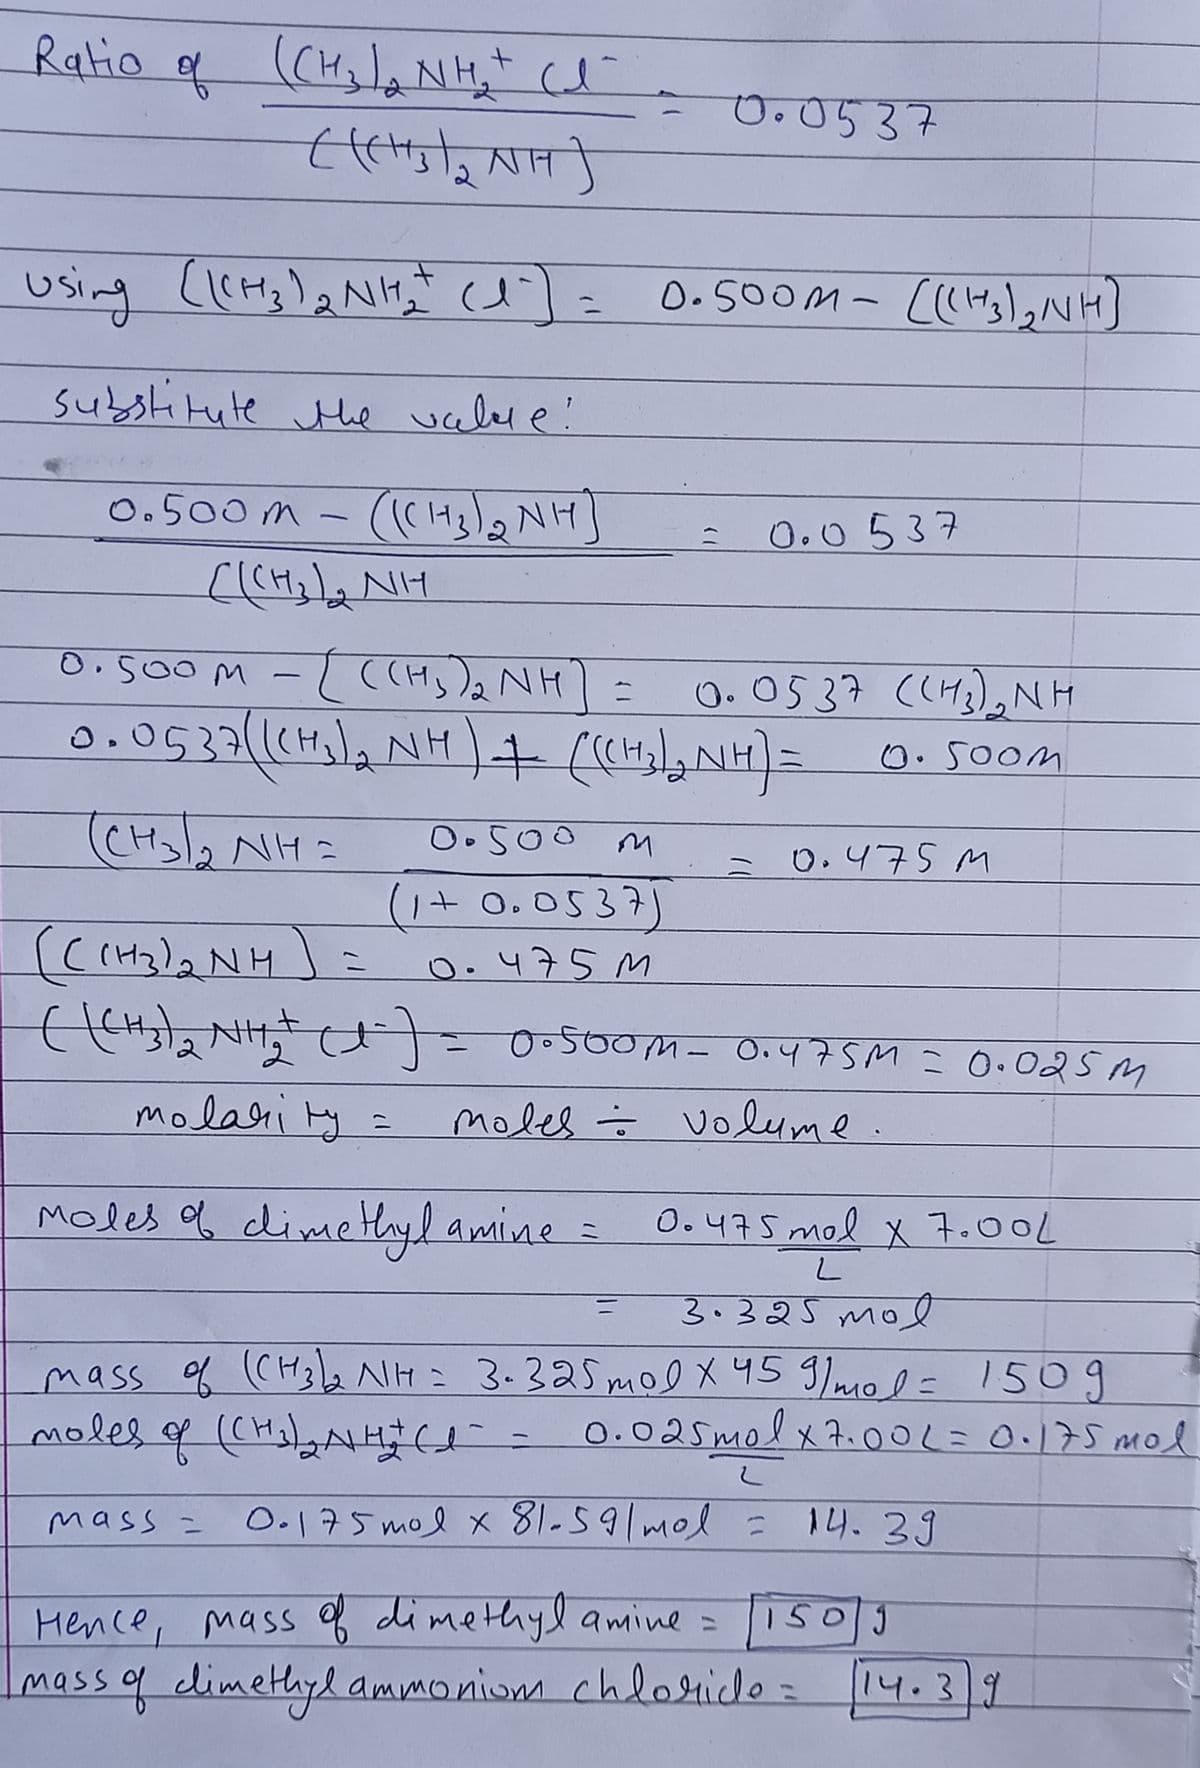 Ratio of (CHala NHe ce
O.0537
(人
0.500M- (H3)]
subslitute Mie uceler e!
0.500m -
0.0537
0.500M -L ((Hs)a NH]
O. 0537 (H2),NH
0.500M
(CH
Oo5oo m
0.475 M
ミ
(1+ 0.053)
(C(H2)2 NH
0.475 M
molari ty =
moles = volume.
Moles f dime Hyl amine =
O.475 mol x 7.00L
3.325 moe
mass of (CH32 NH= 3.325 mol x 45 9/mol= 150g
moles q (CHolaANHa
0.025molx7.00L=0.17S mol
0.175 mol x81-59/mol =
14.39
mass =
Hence, massf dimethylamine =
mass of dimethyl ammoniom chloide
150J
14.39
%3D
